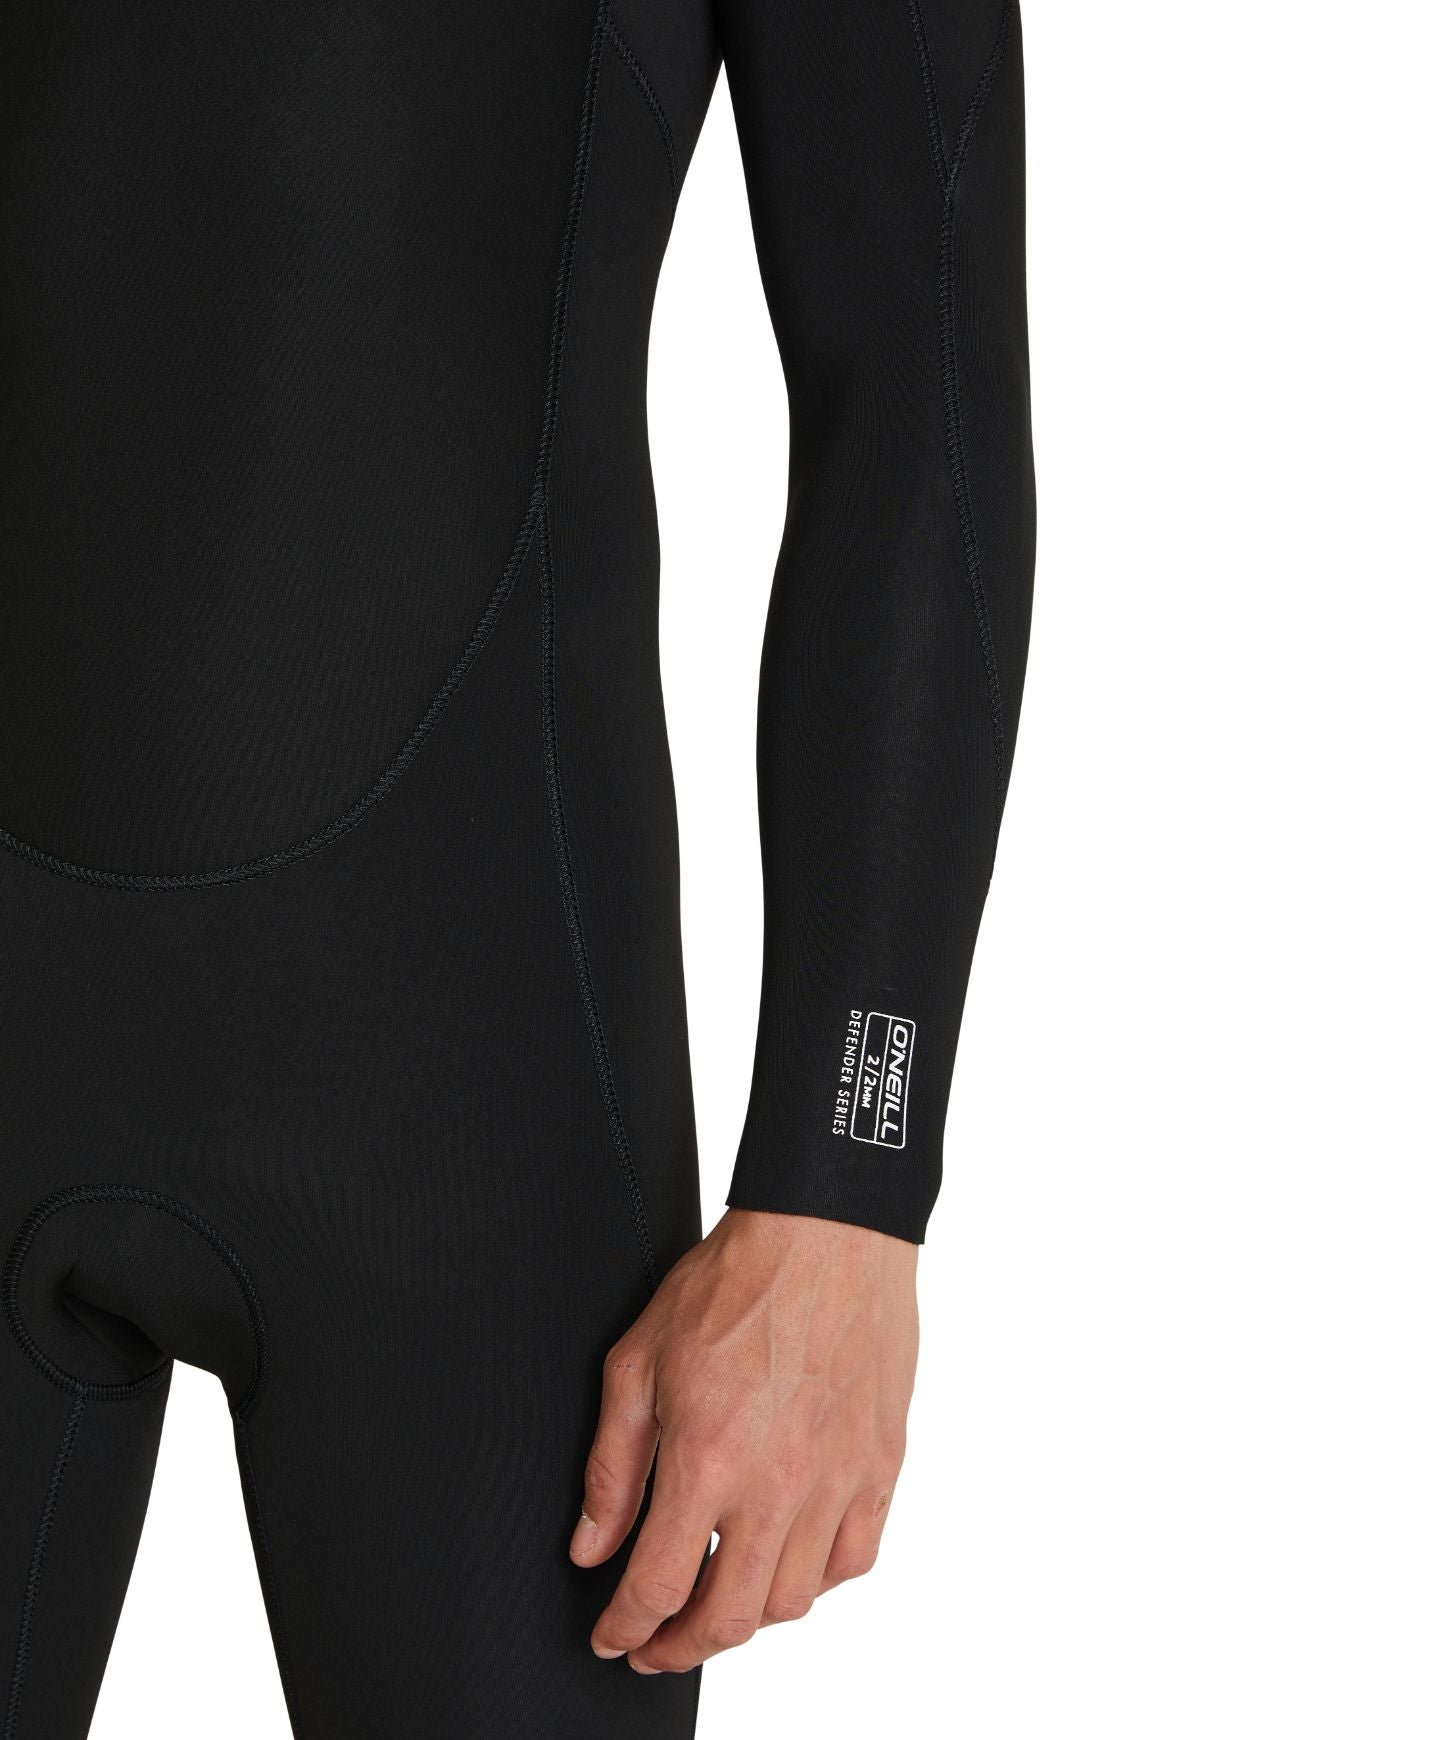 Defender Chest Zip Long Sleeve Spring Suit 2mm Wetsuit - Black